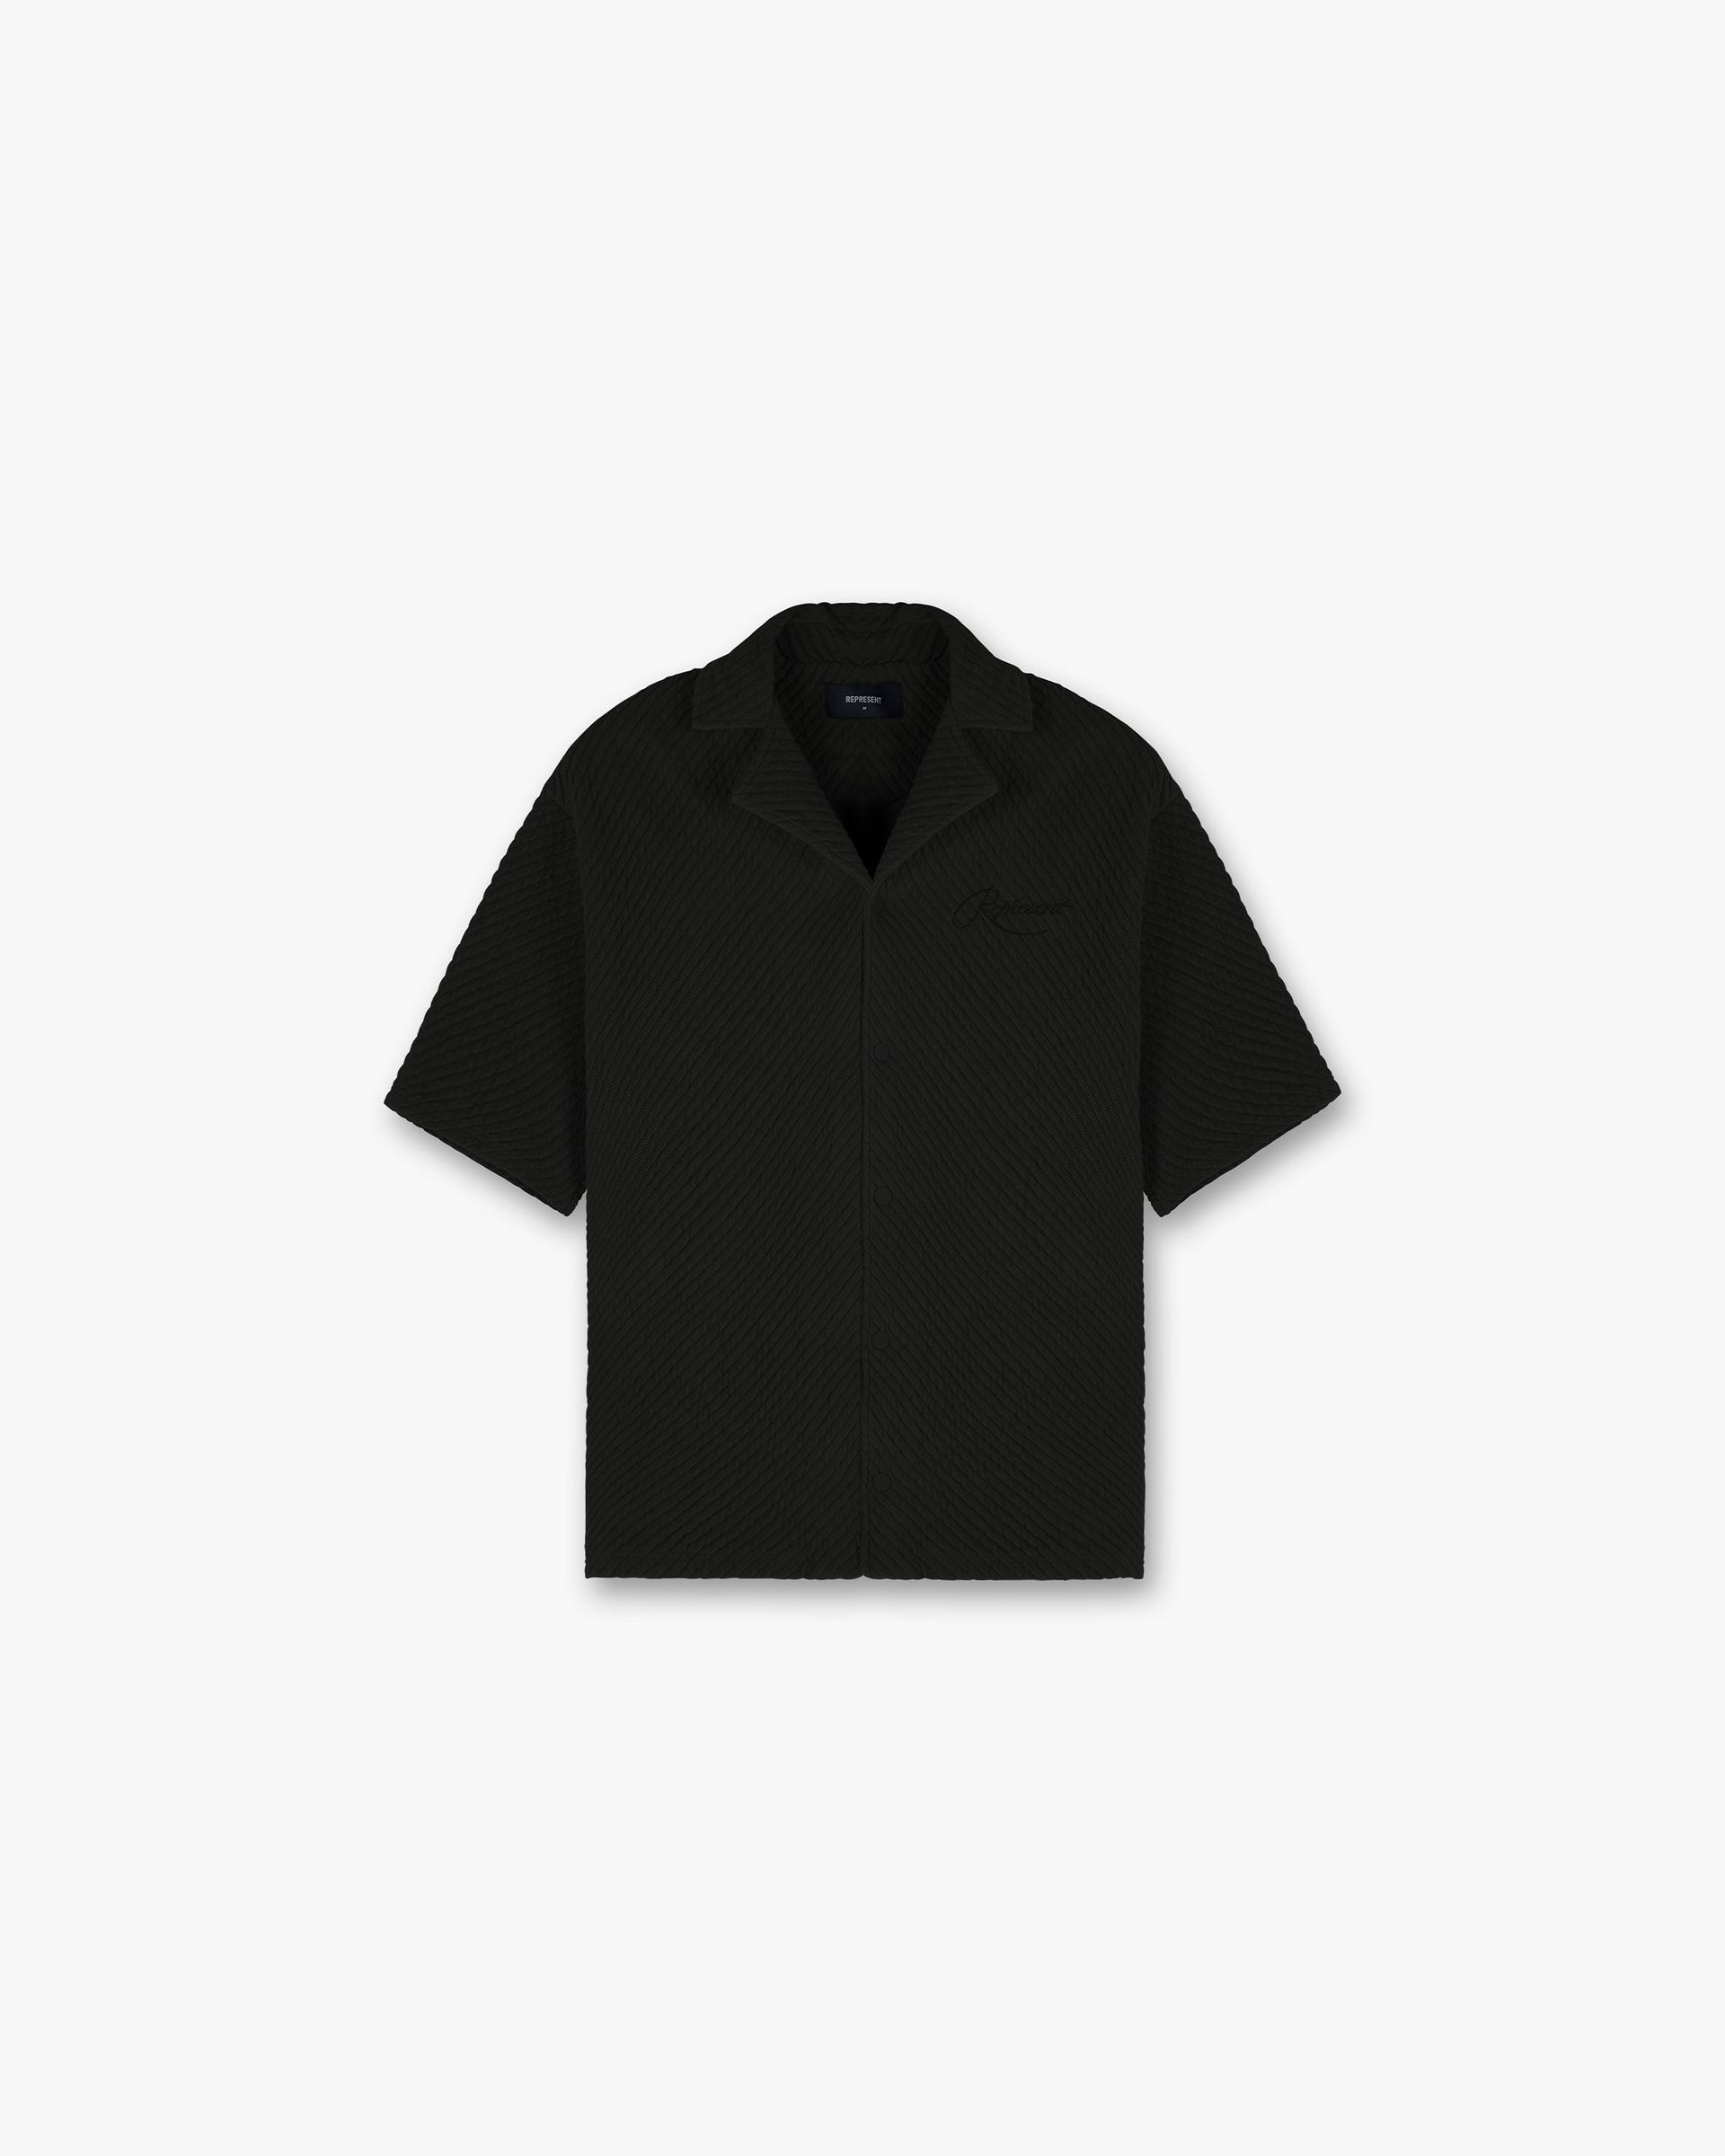 Ottoman Shirt | Black Shirts SC23 | Represent Clo